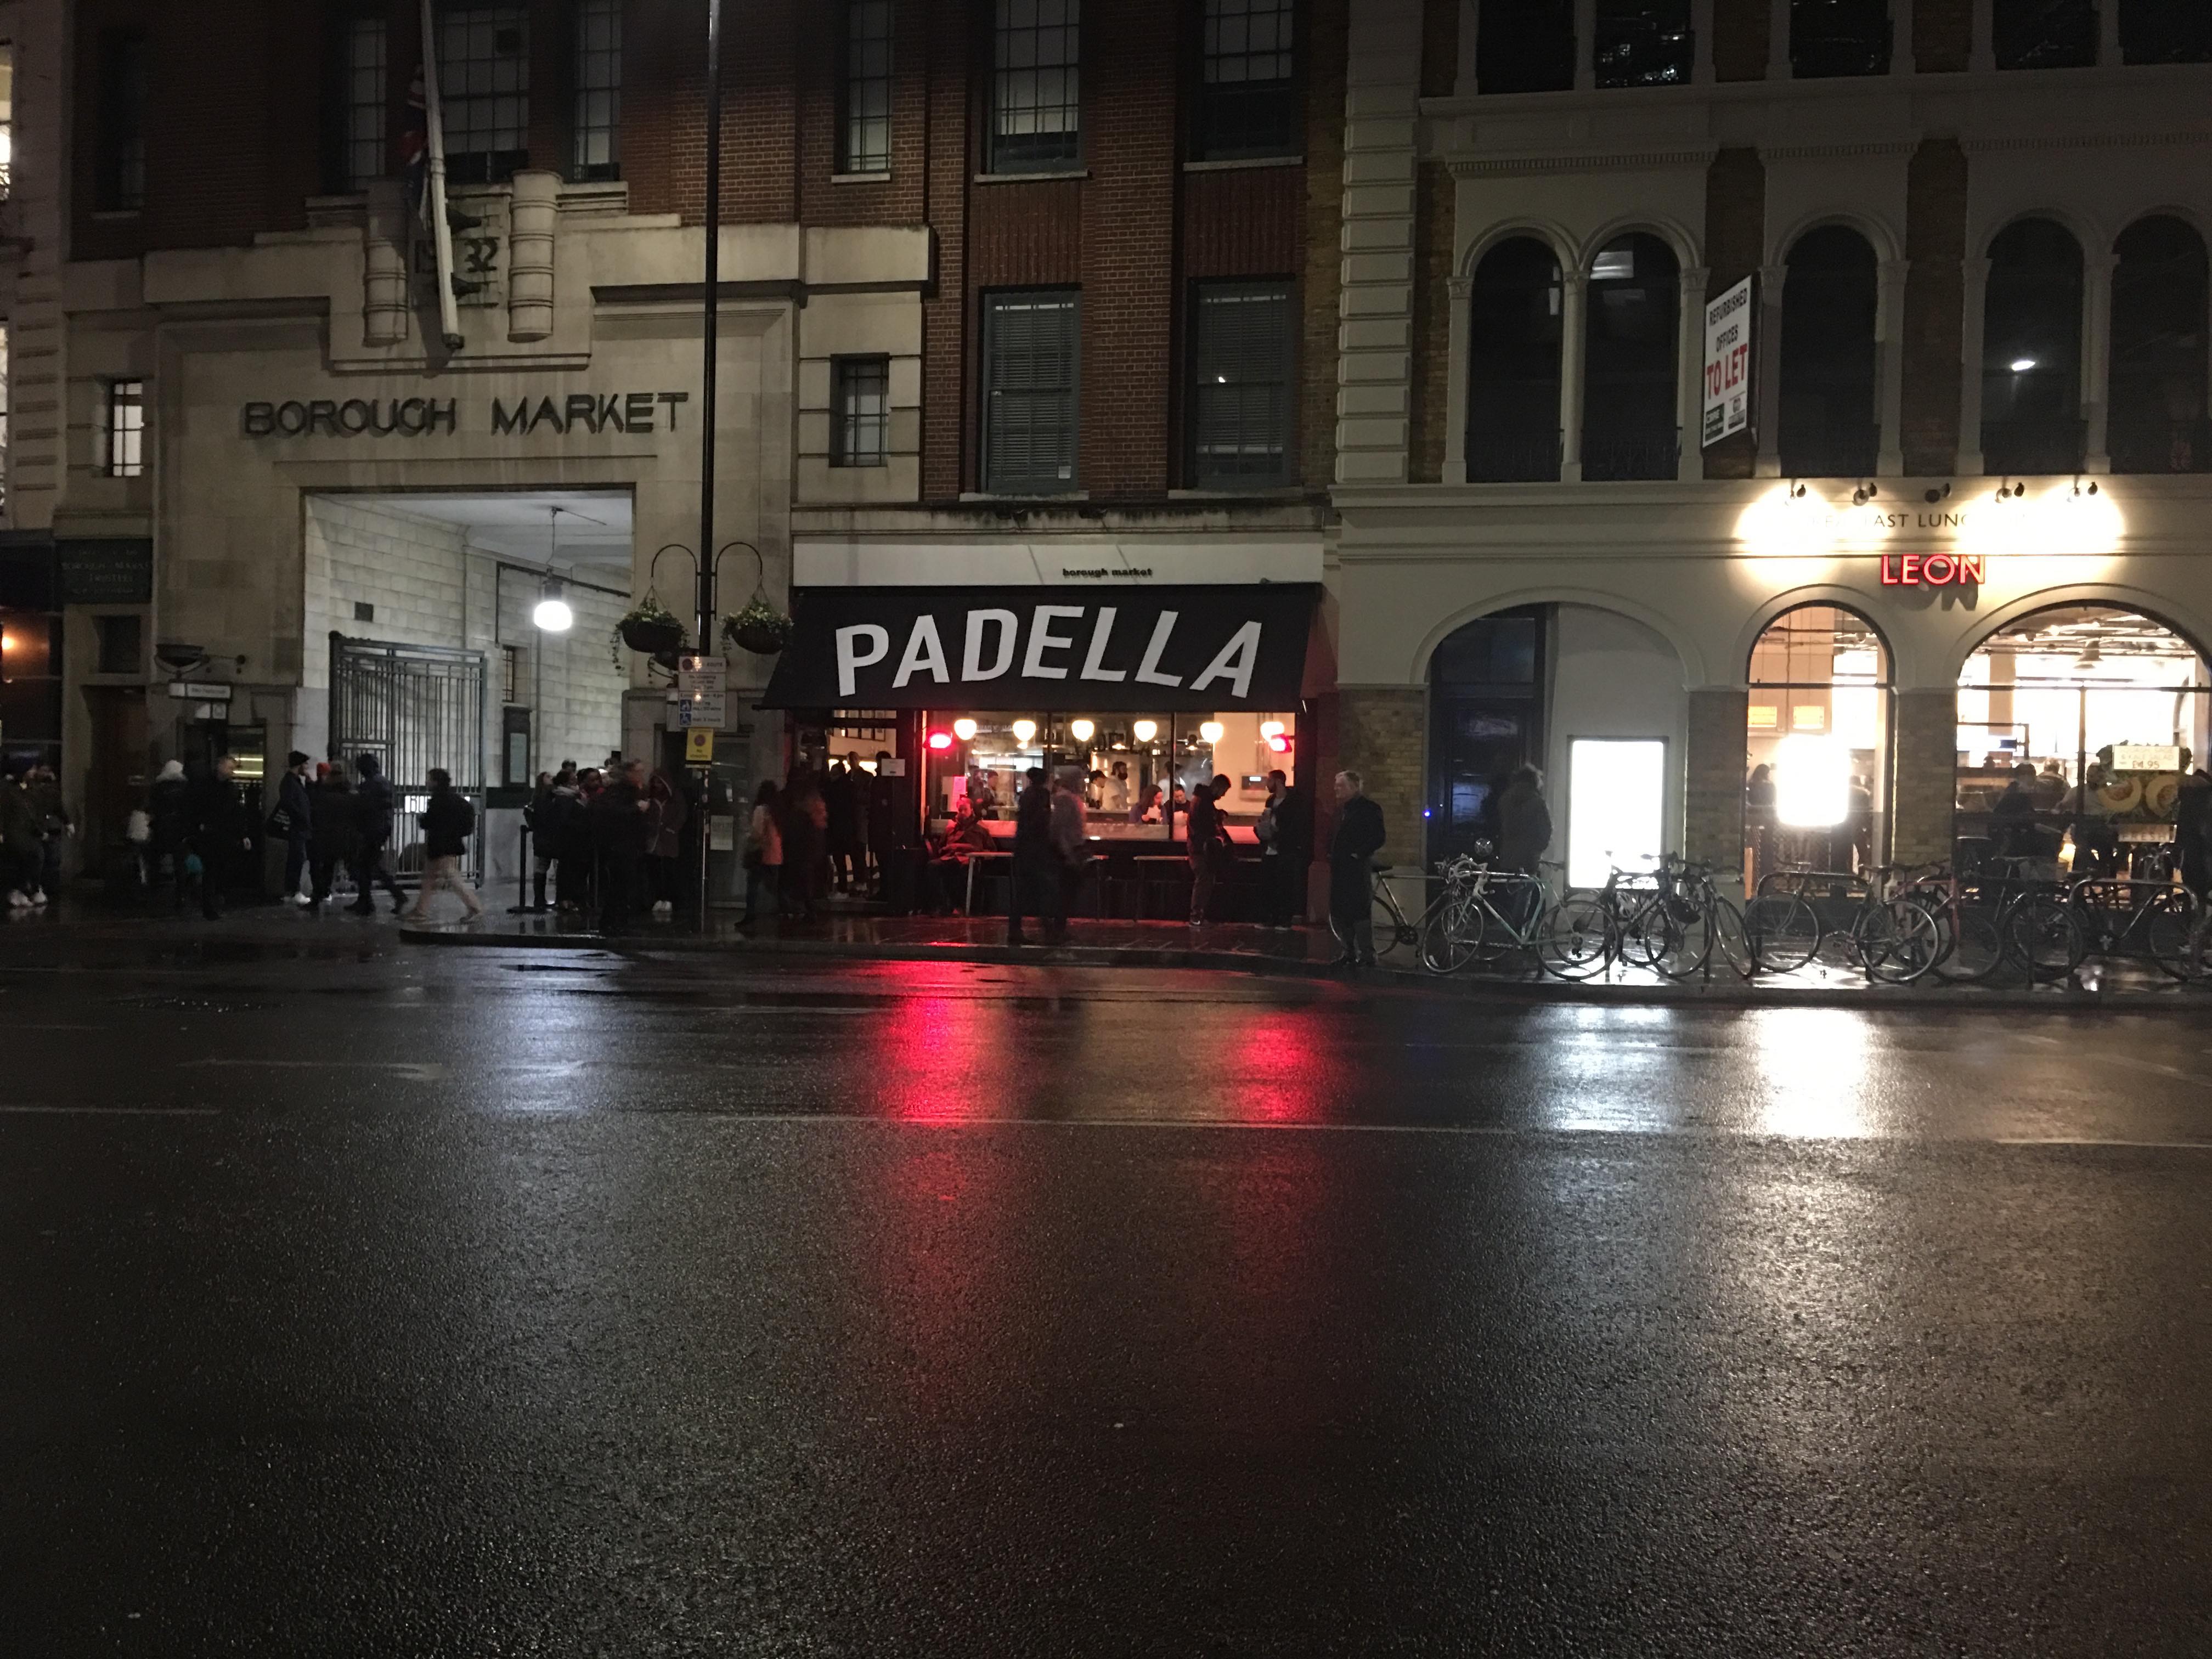 Padella - Food and Drink News